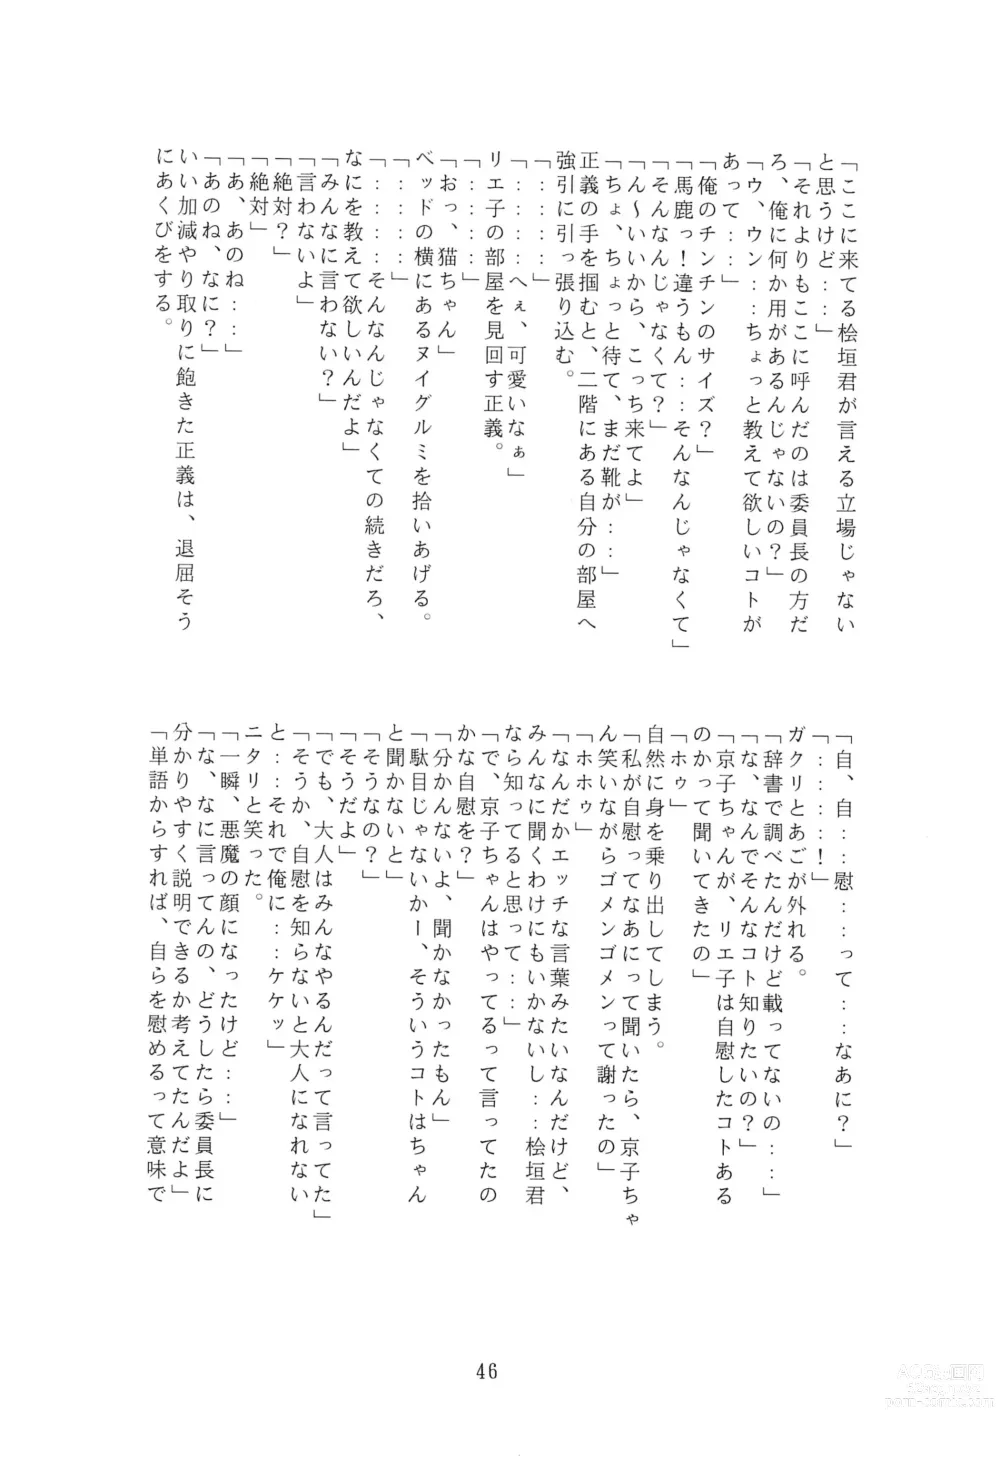 Page 46 of doujinshi JANGLE ONI Mermaid